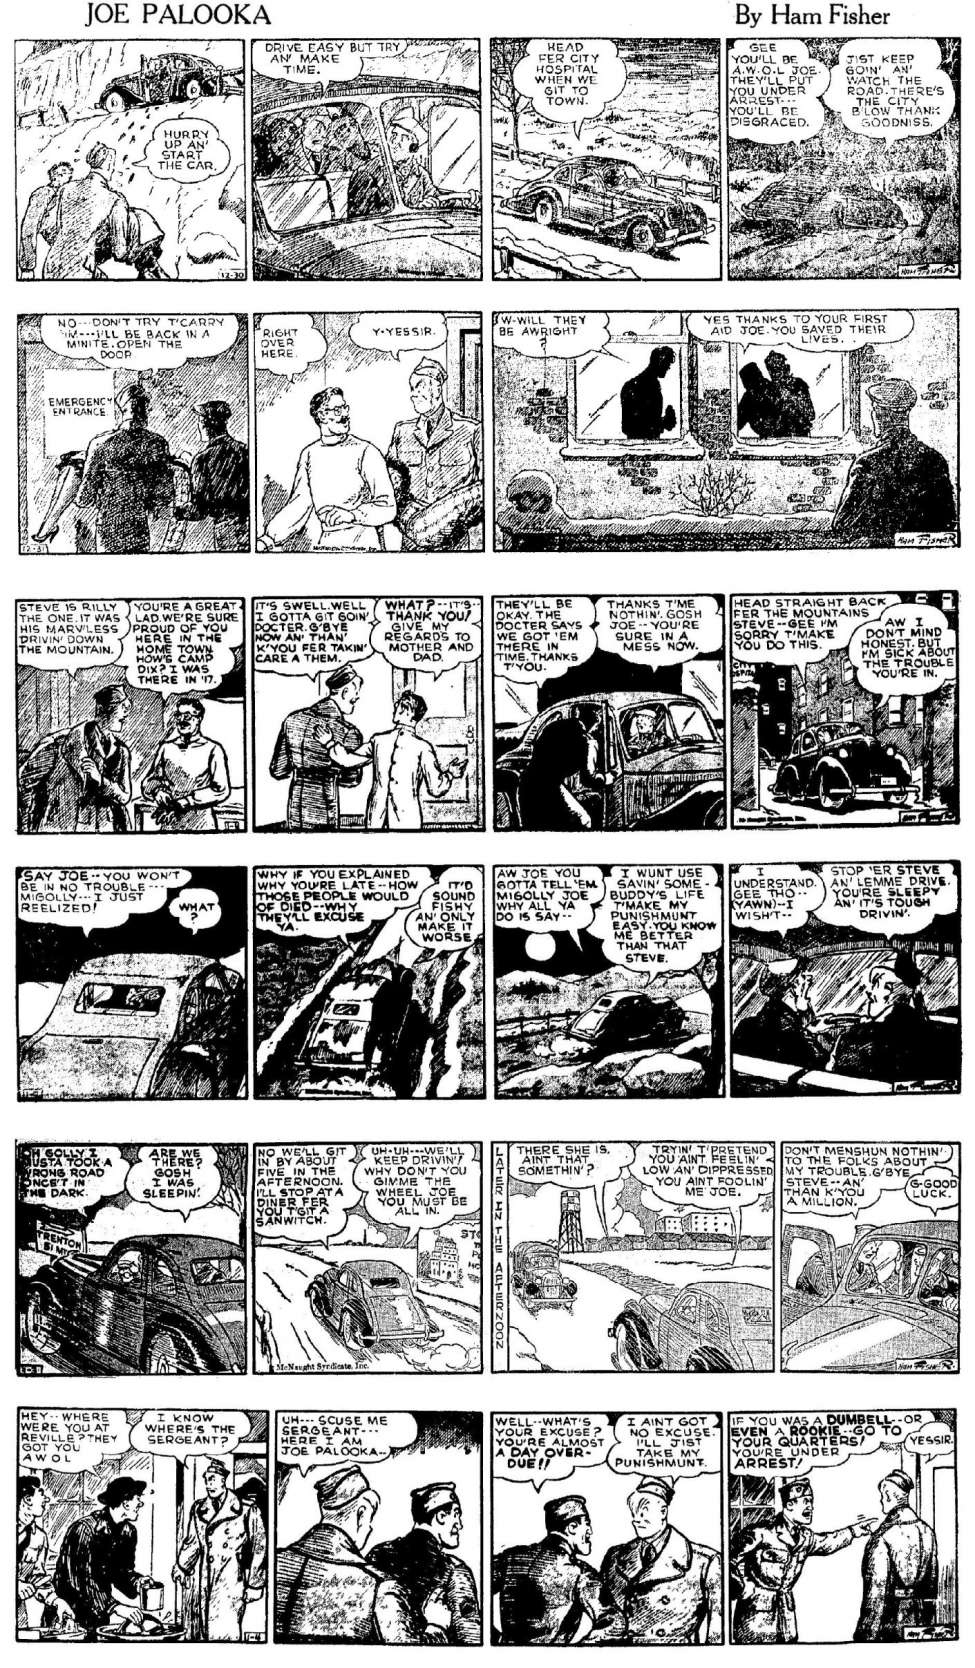 Comic Book Cover For Joe Palooka 1941